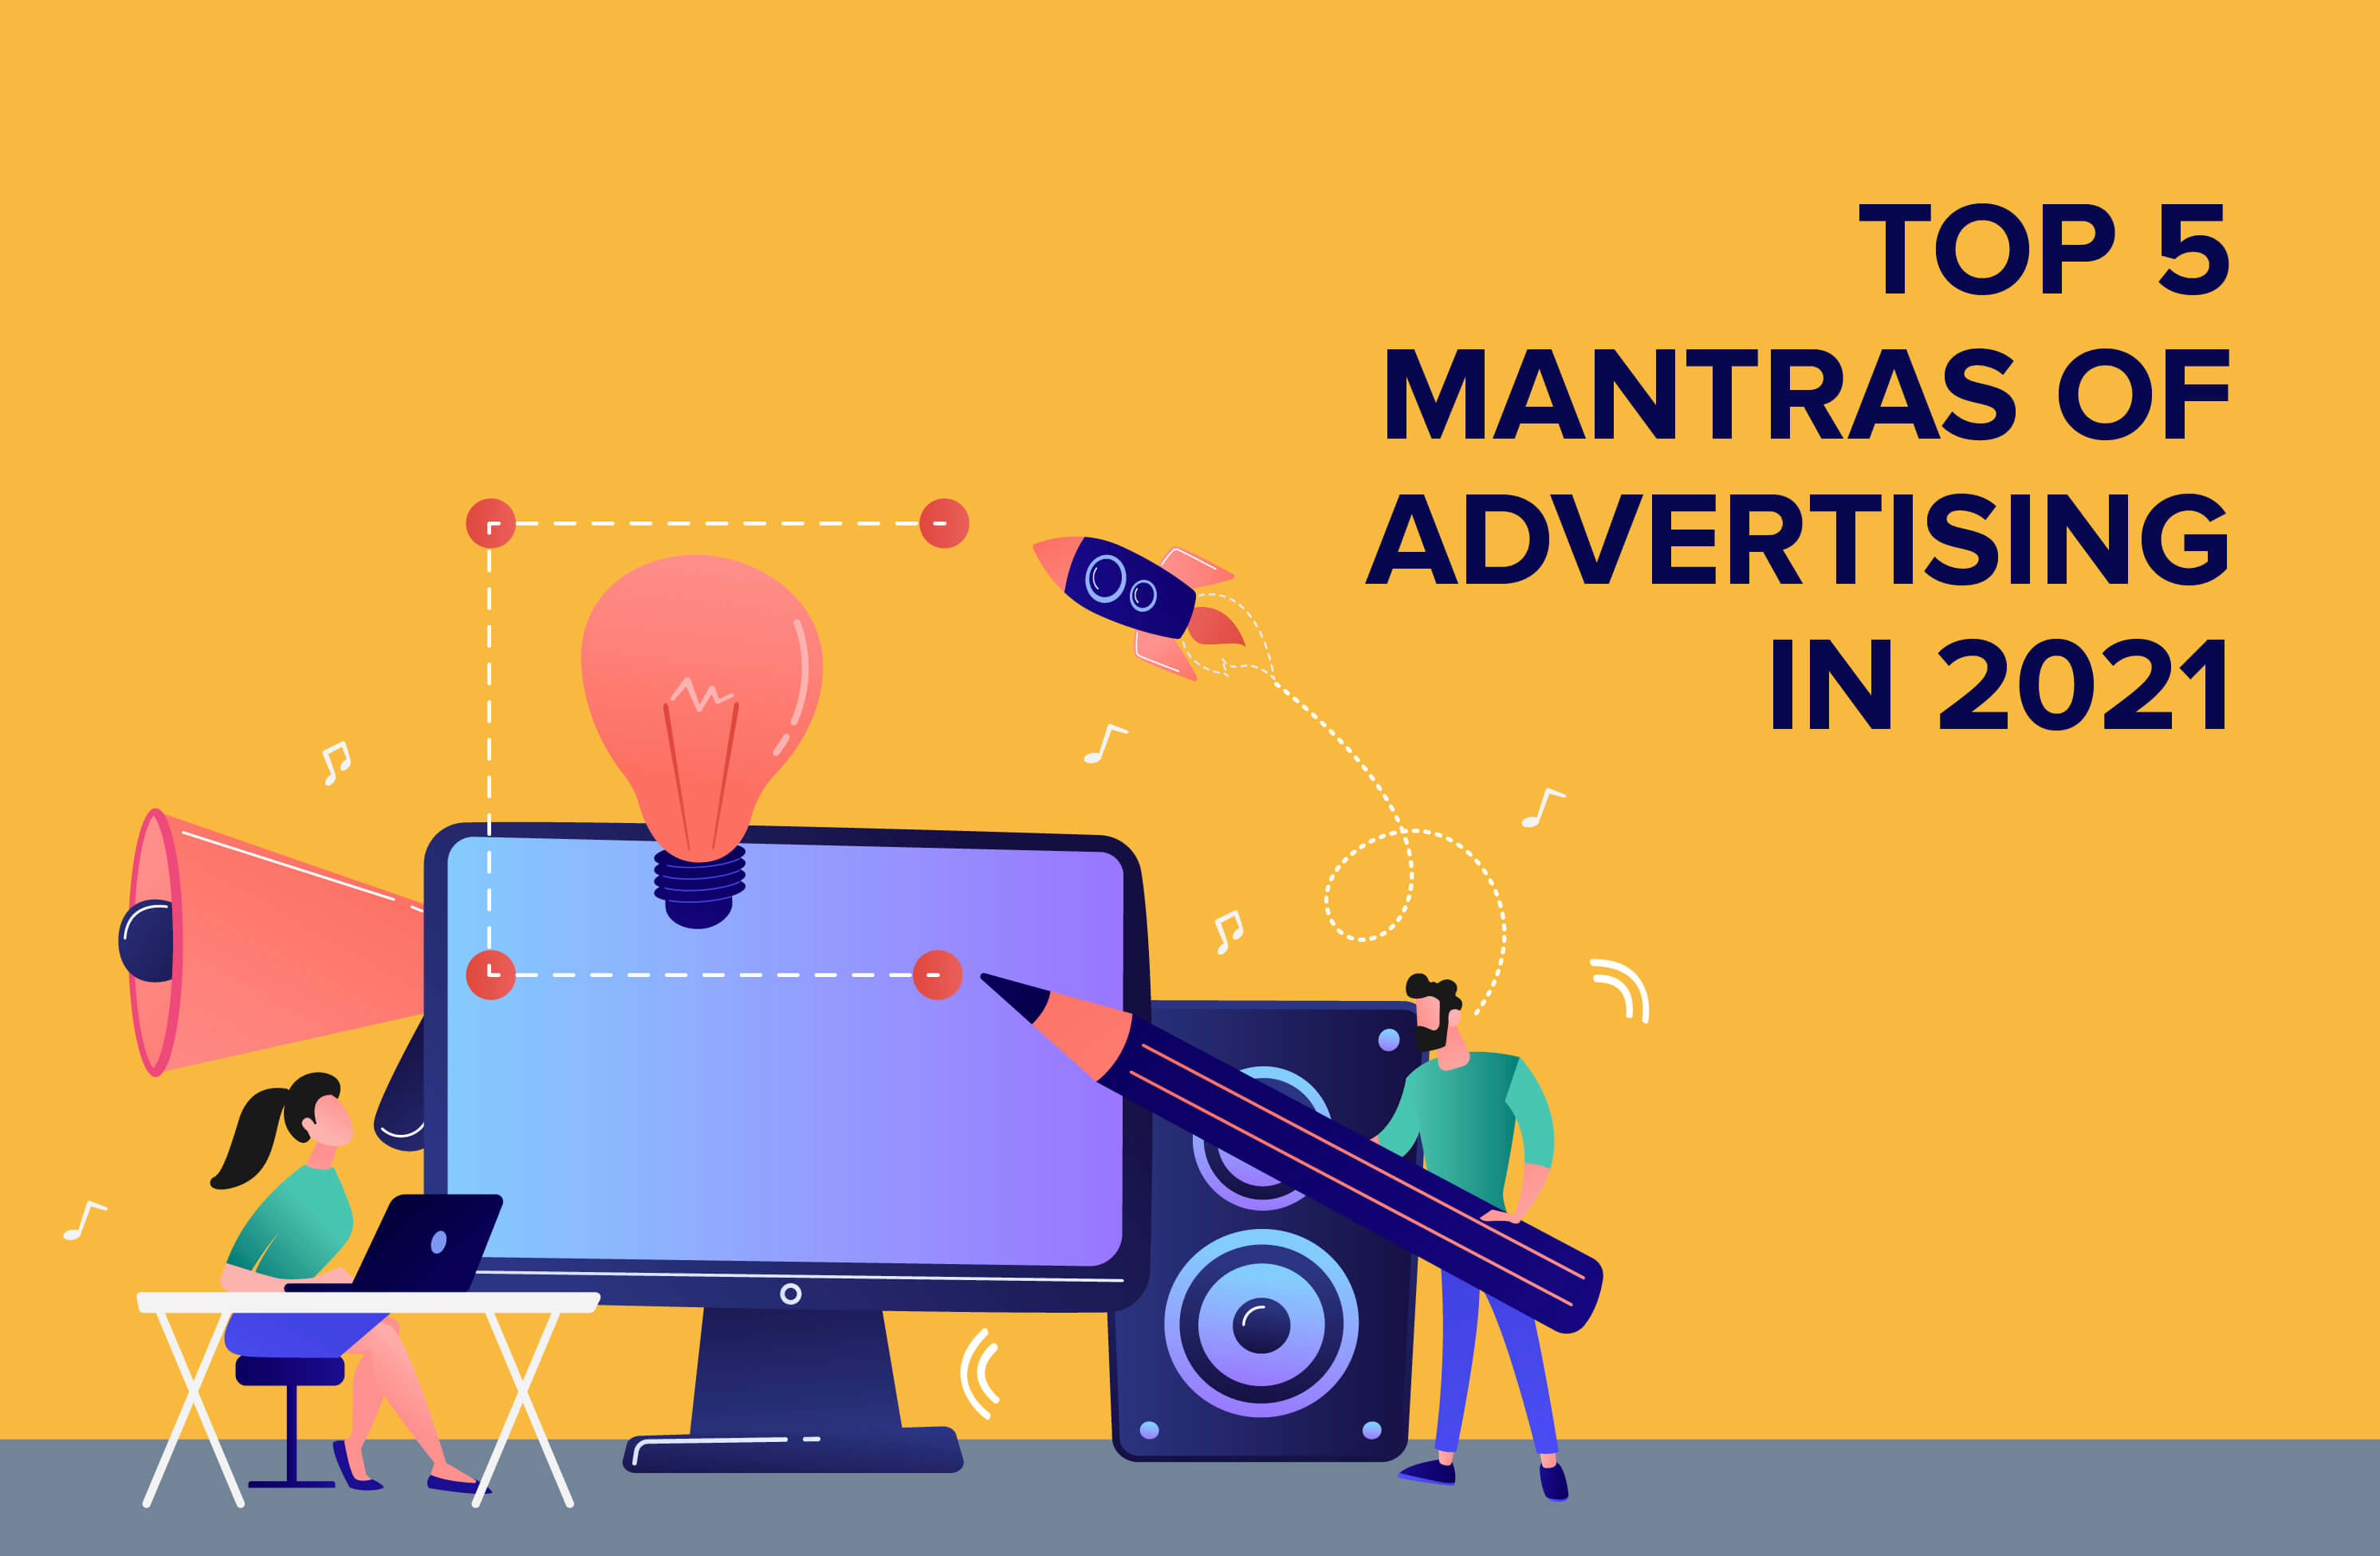 Top 5 mantras of advertising in 2021